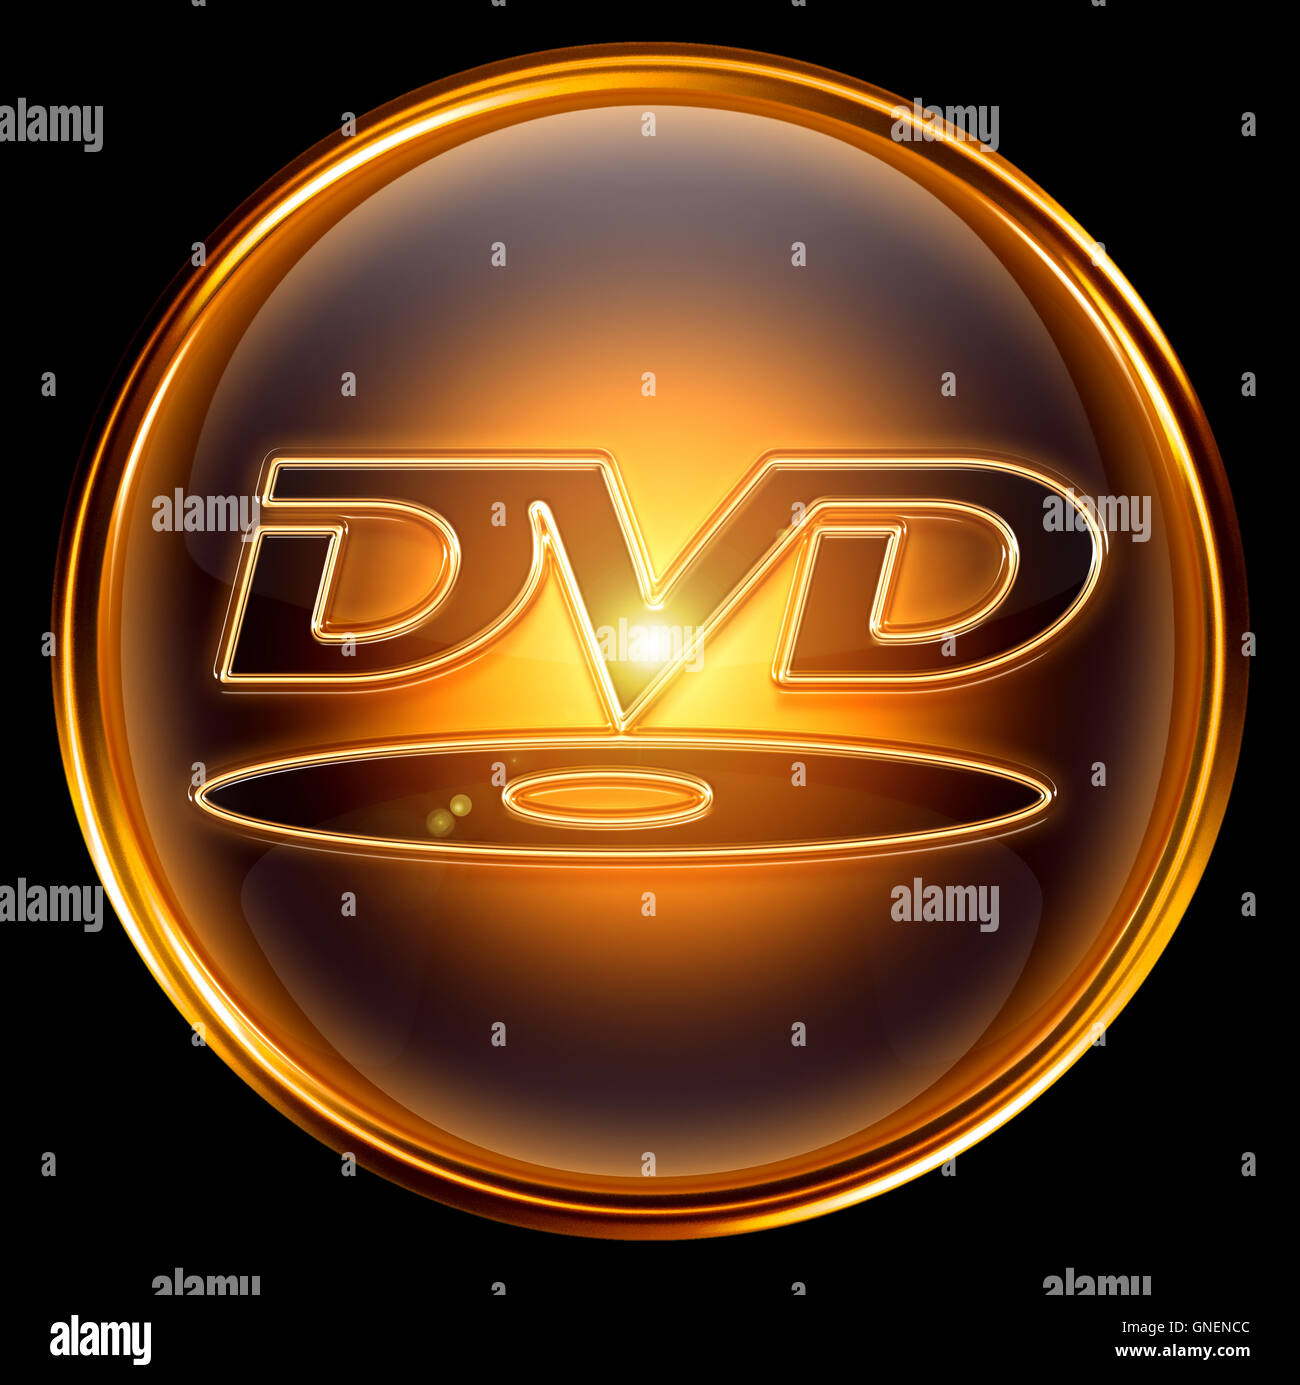 DVD icon gold, isolated on black background Stock Photo - Alamy